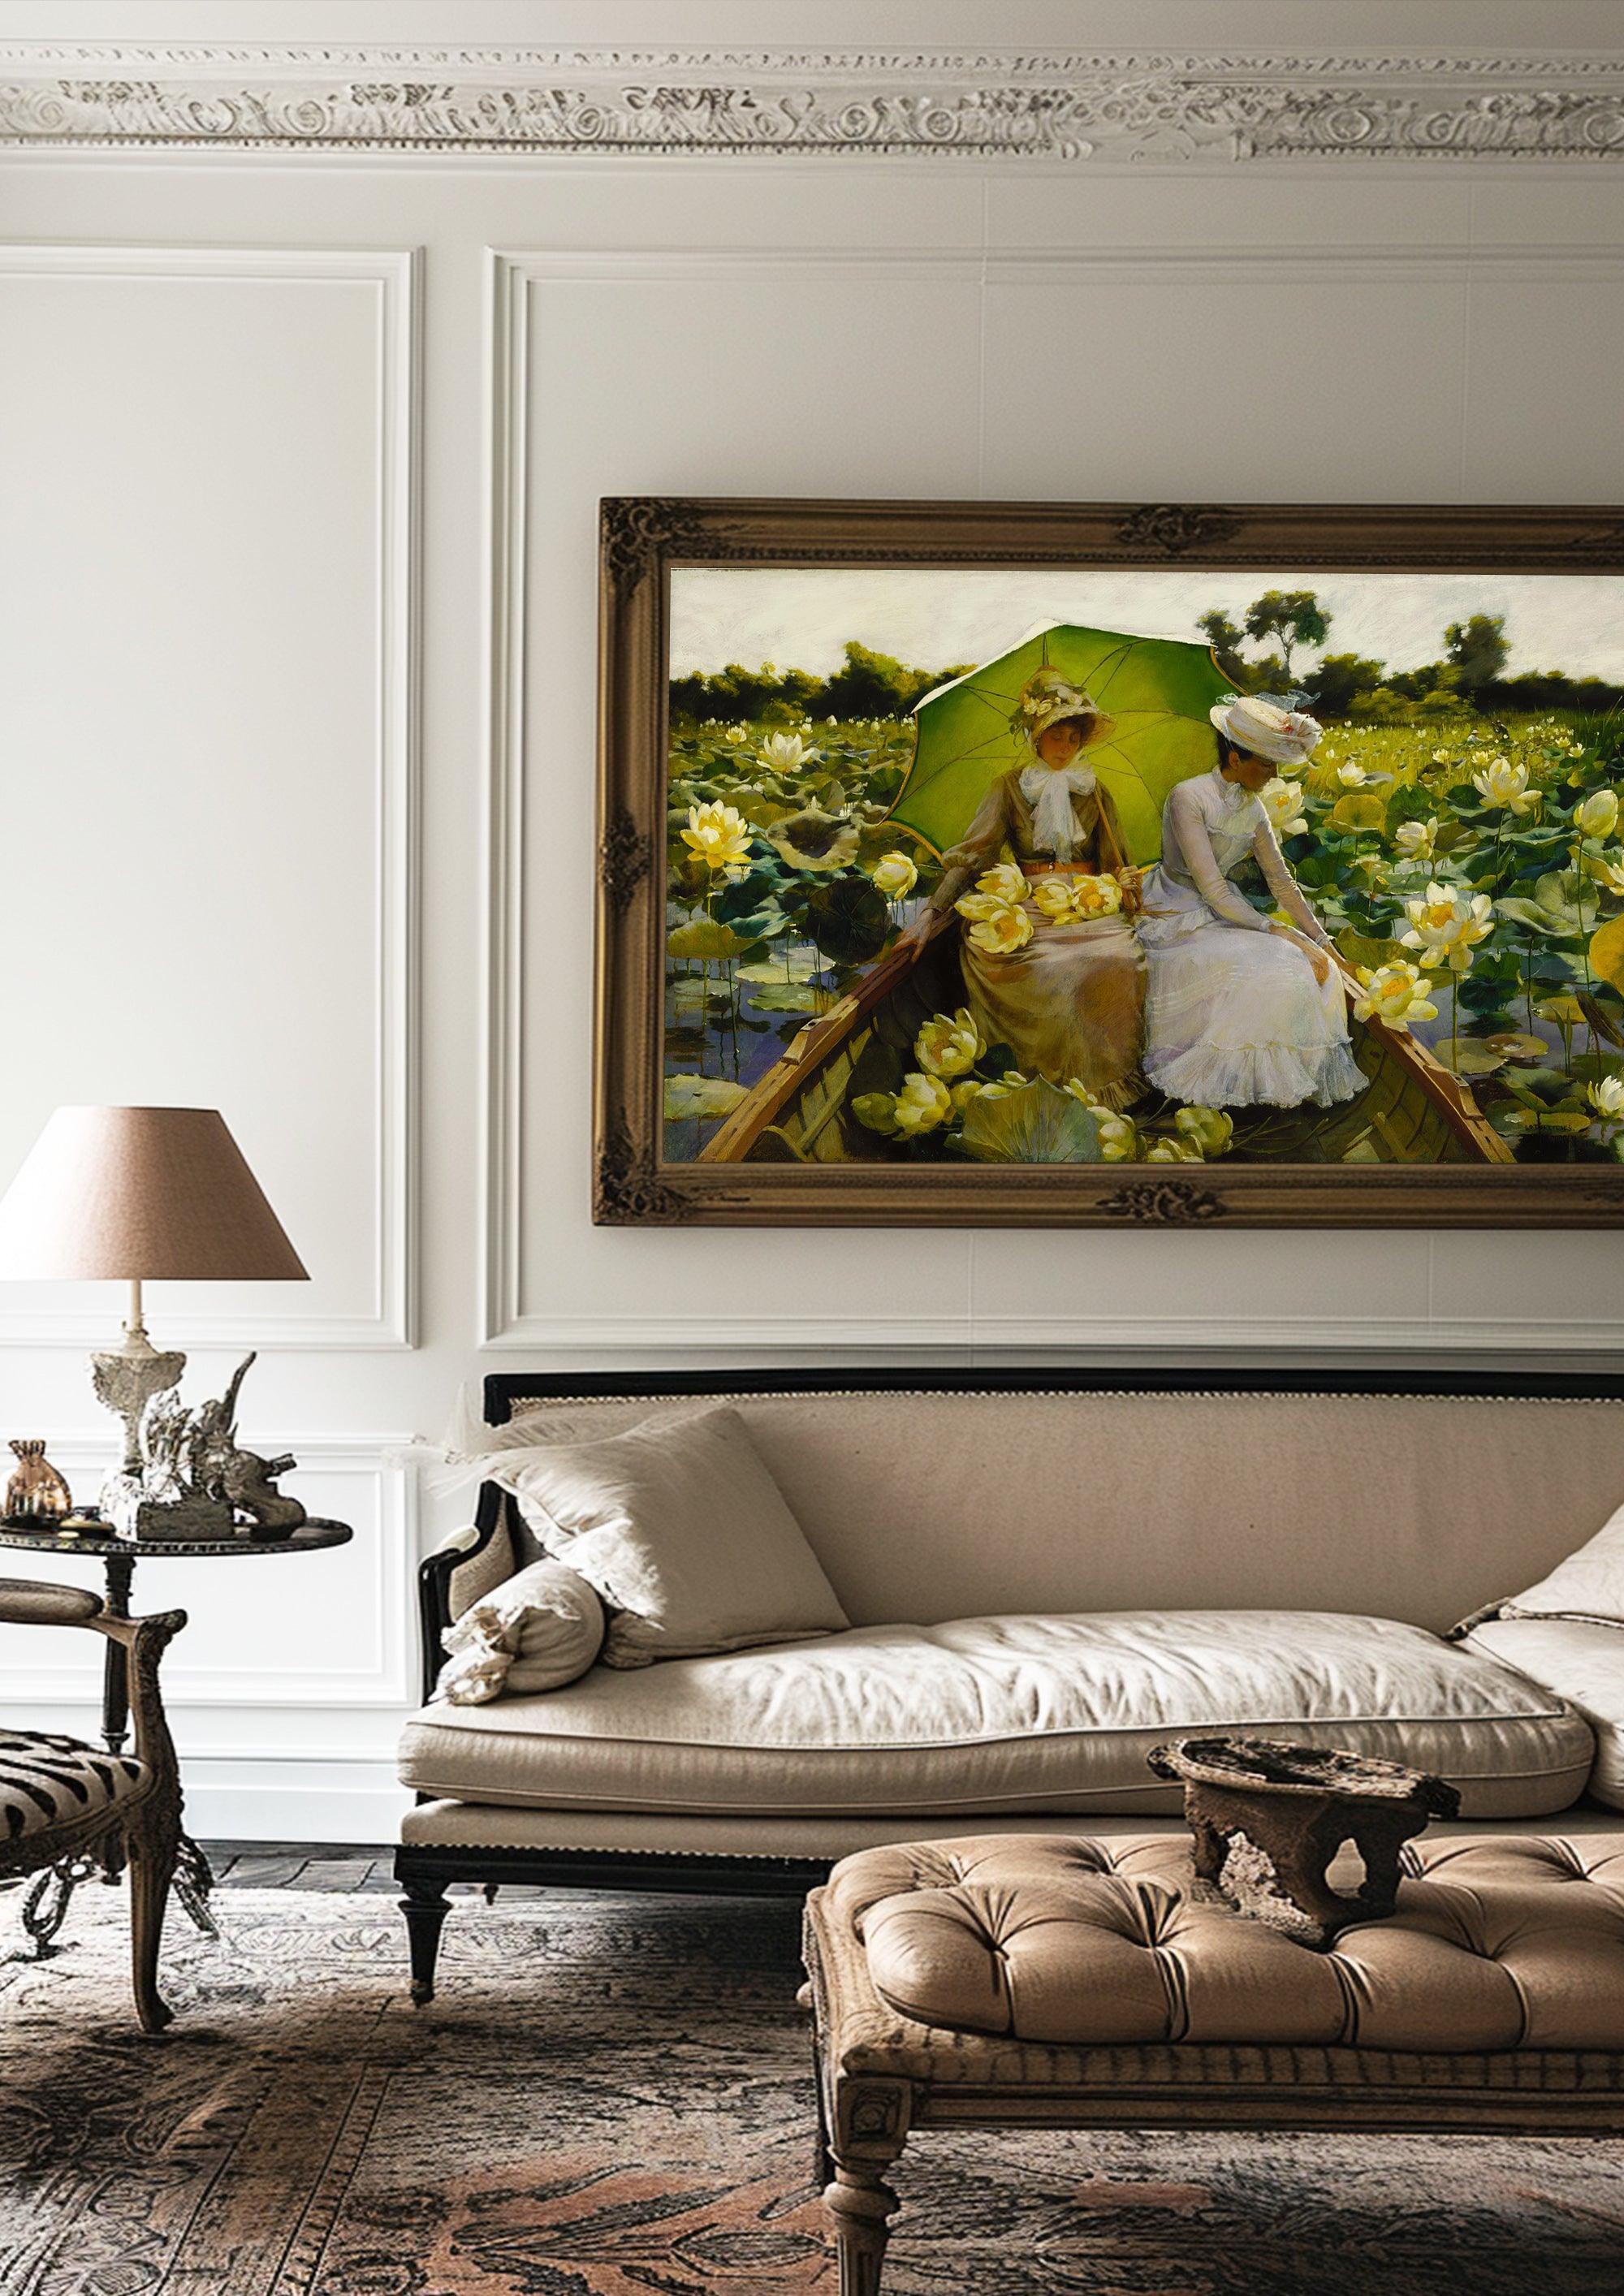 Romanticism,Wall Art,Canvas Print,Framed RC 8 - ParfaiteArt